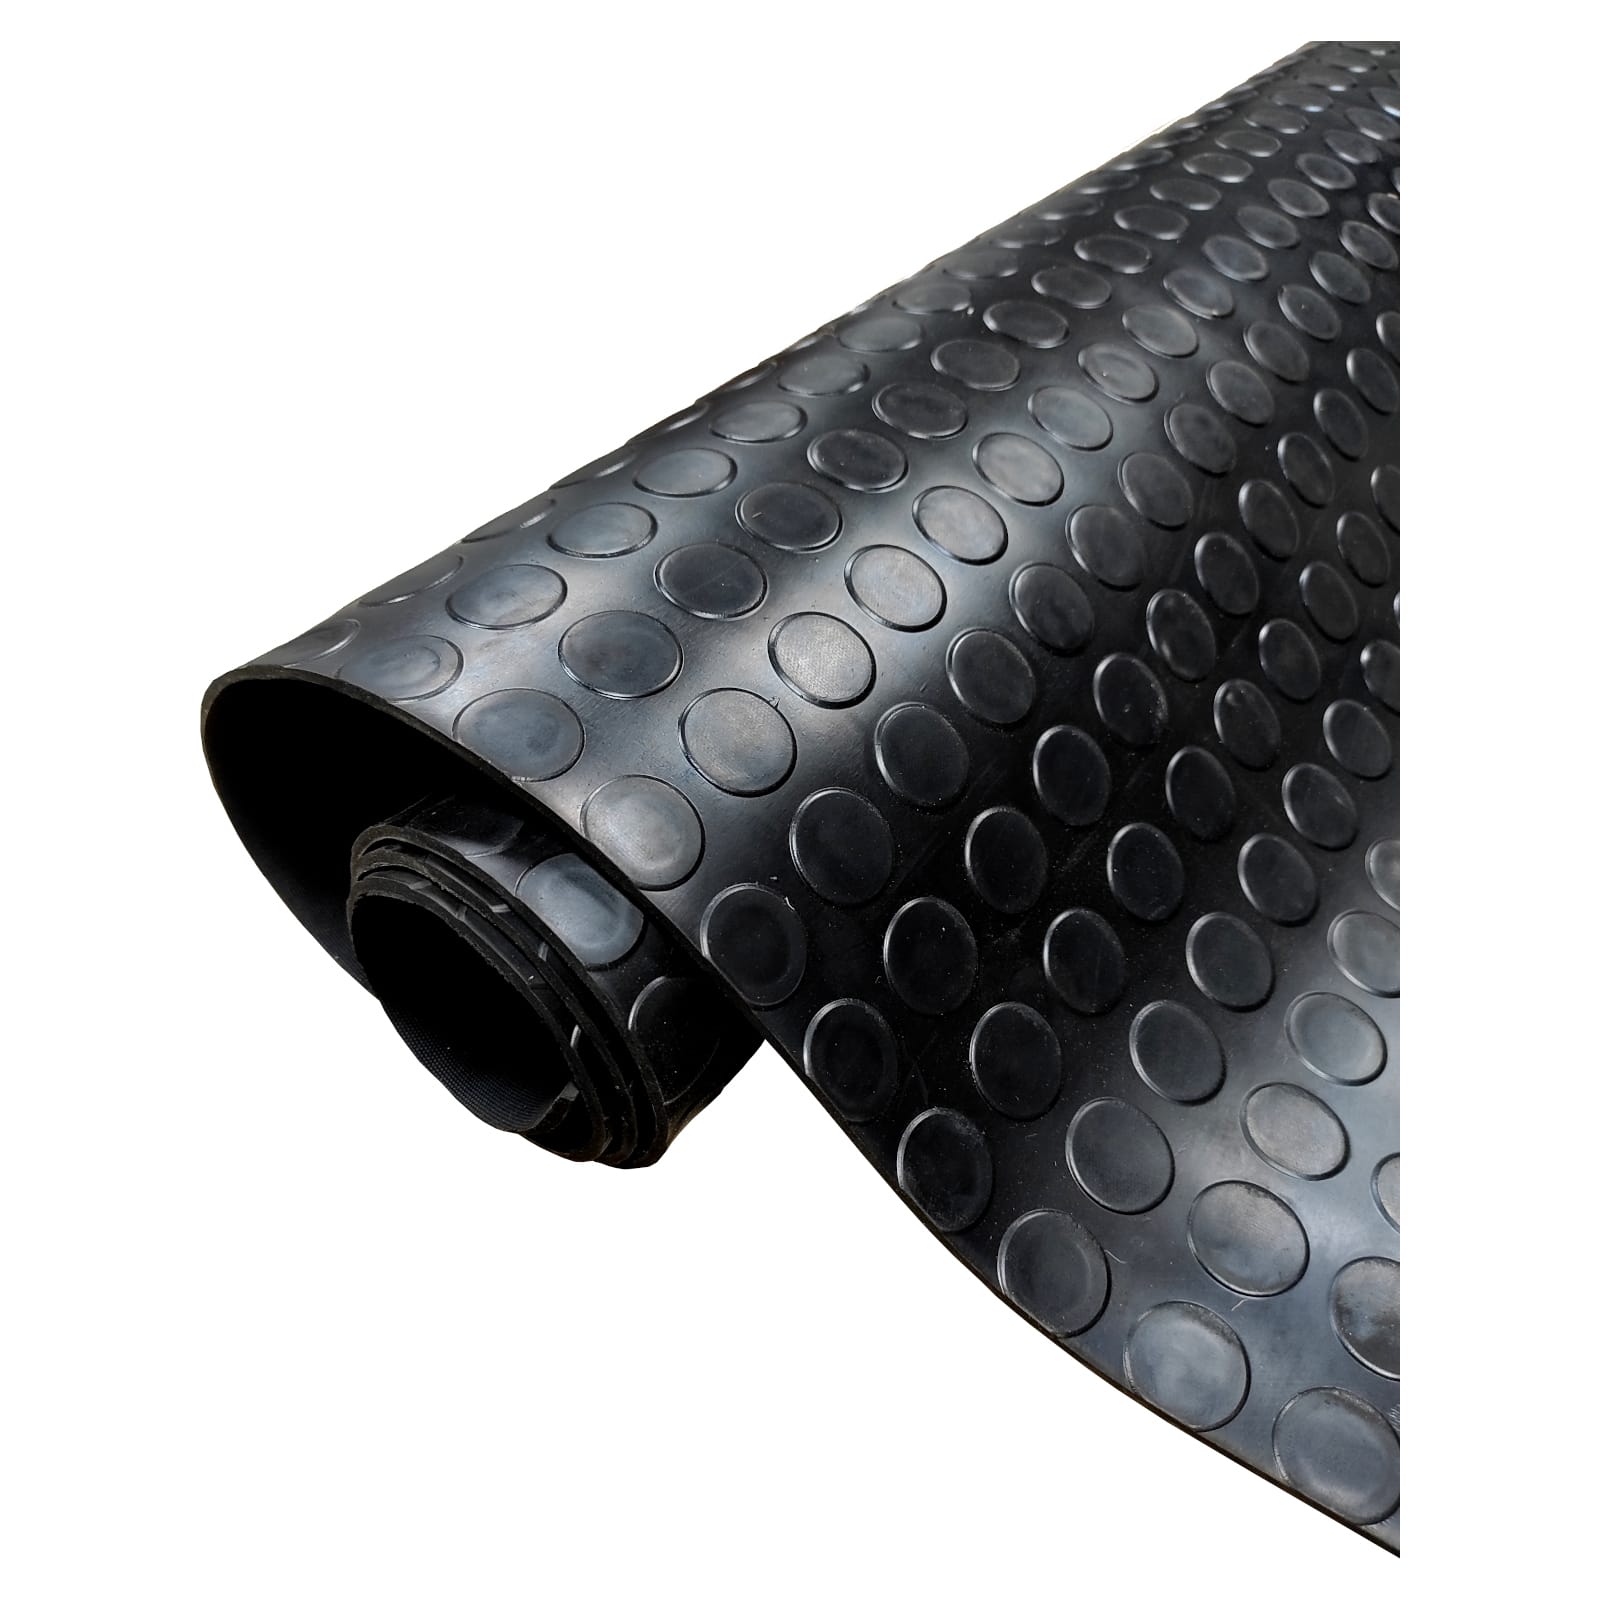 Revestimiento de Caucho Antideslizante Suelo Goma PVC (Negro -140 x 150 cm)